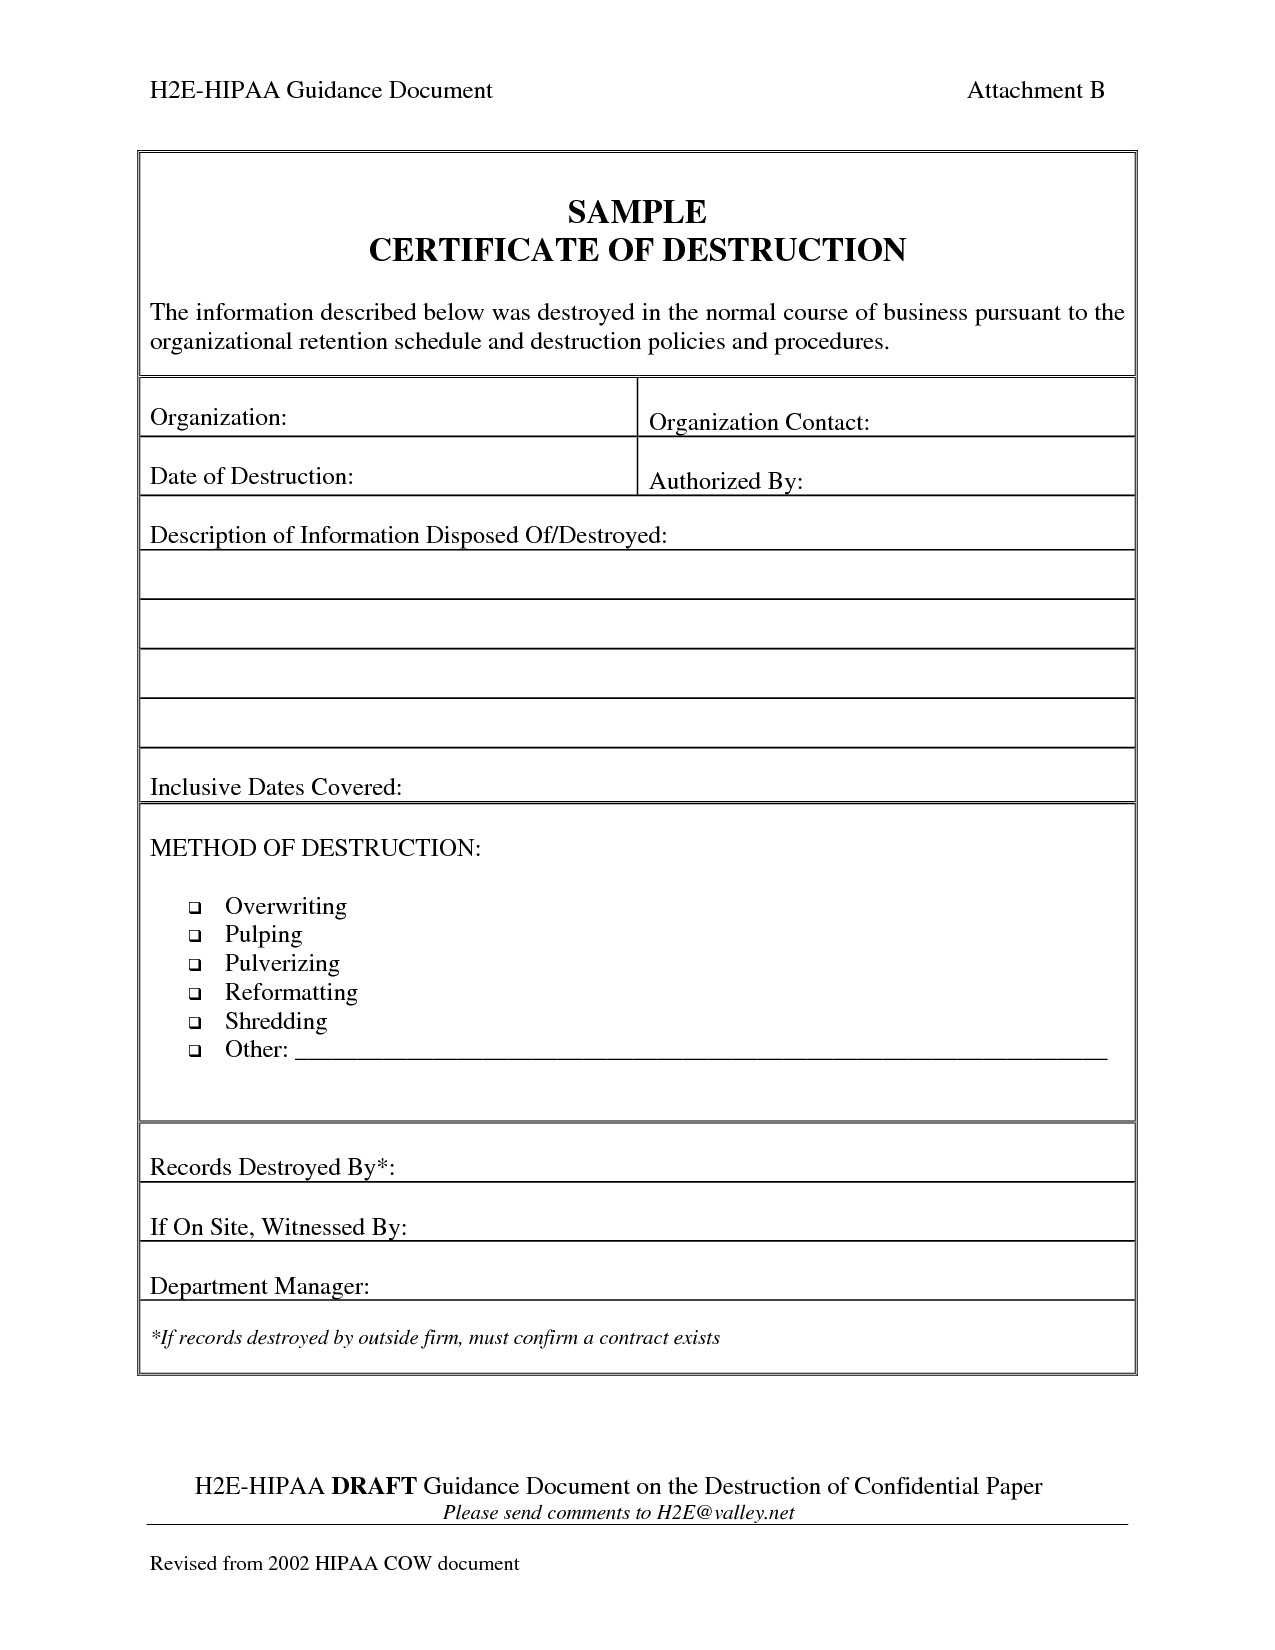 Template Ideas Certificate Of Destruction Frightening Product with regard to Destruction Certificate Template